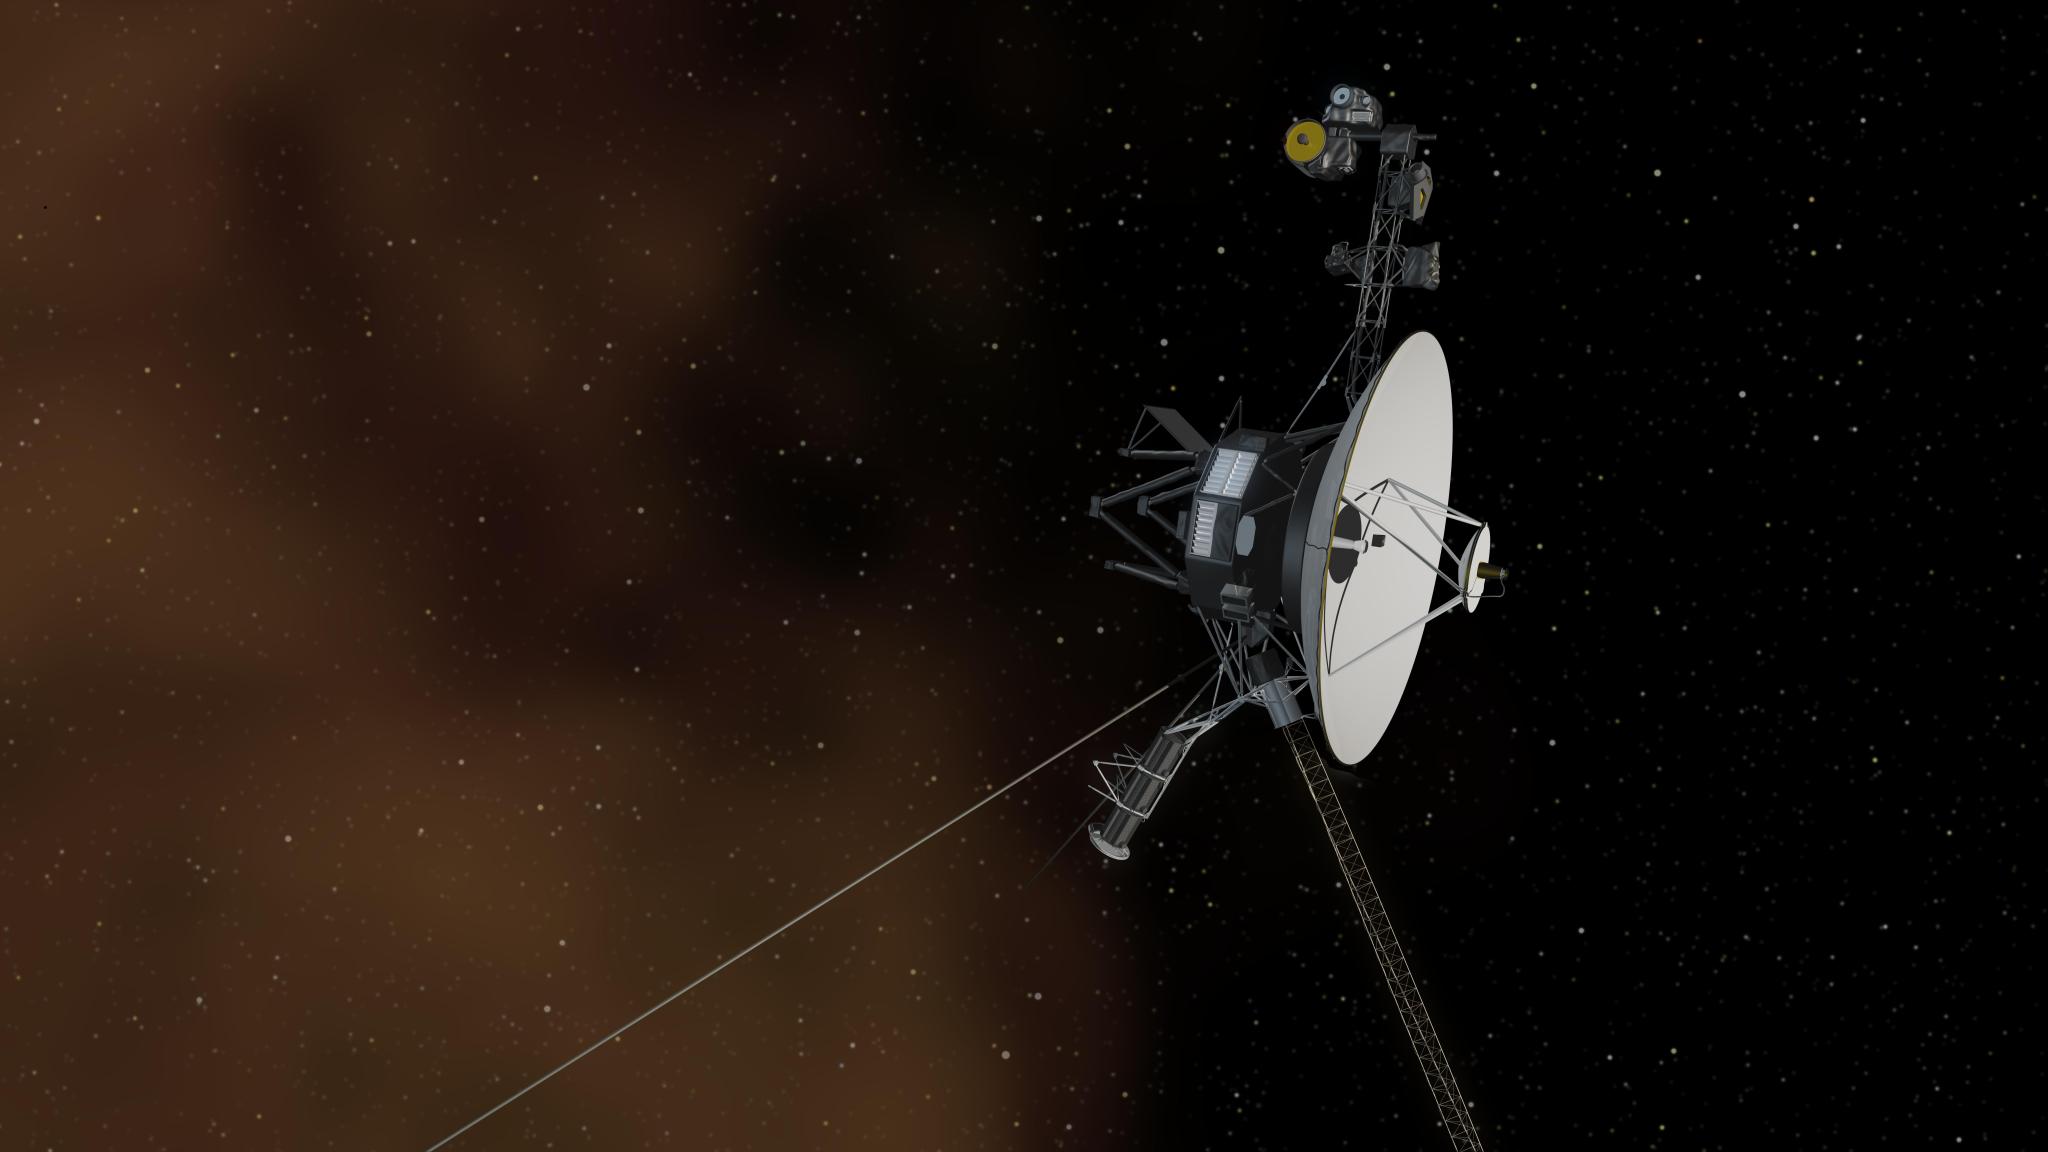 Voyager 1 Light-Sensing Instrument Non-operational | Mirage News